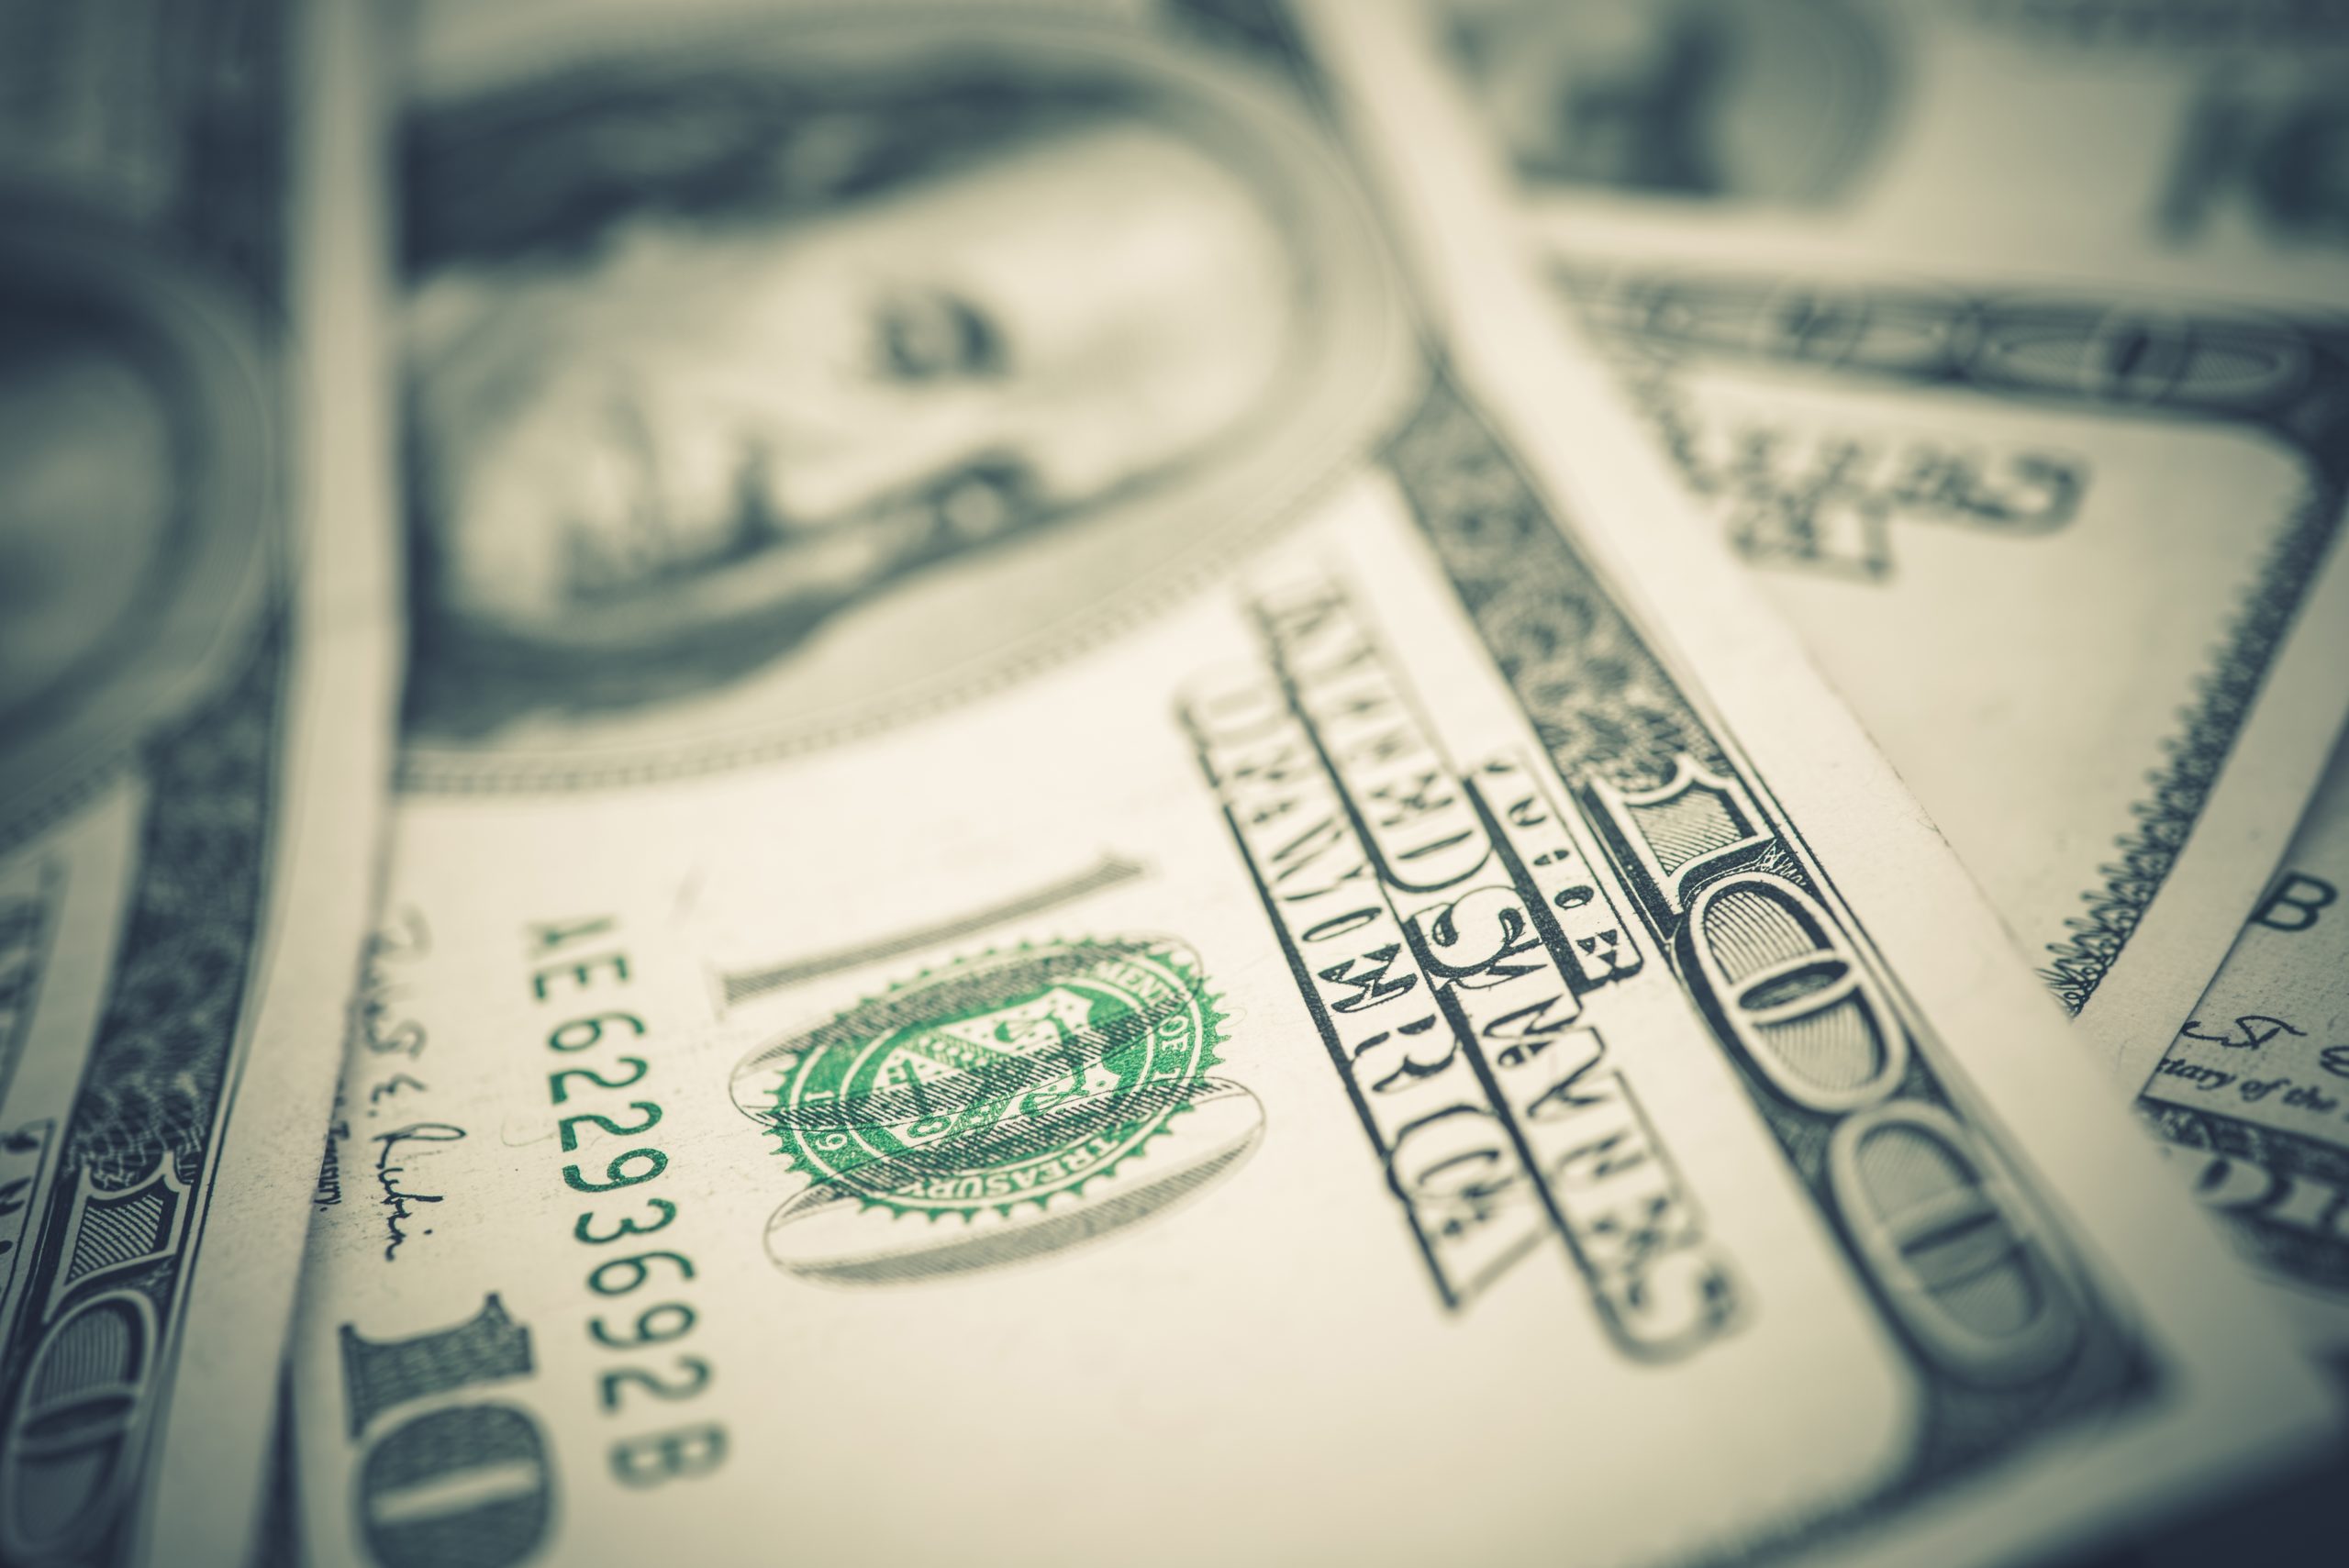 US Dollars Banknotes Closeup. American Economy Concept Photo.